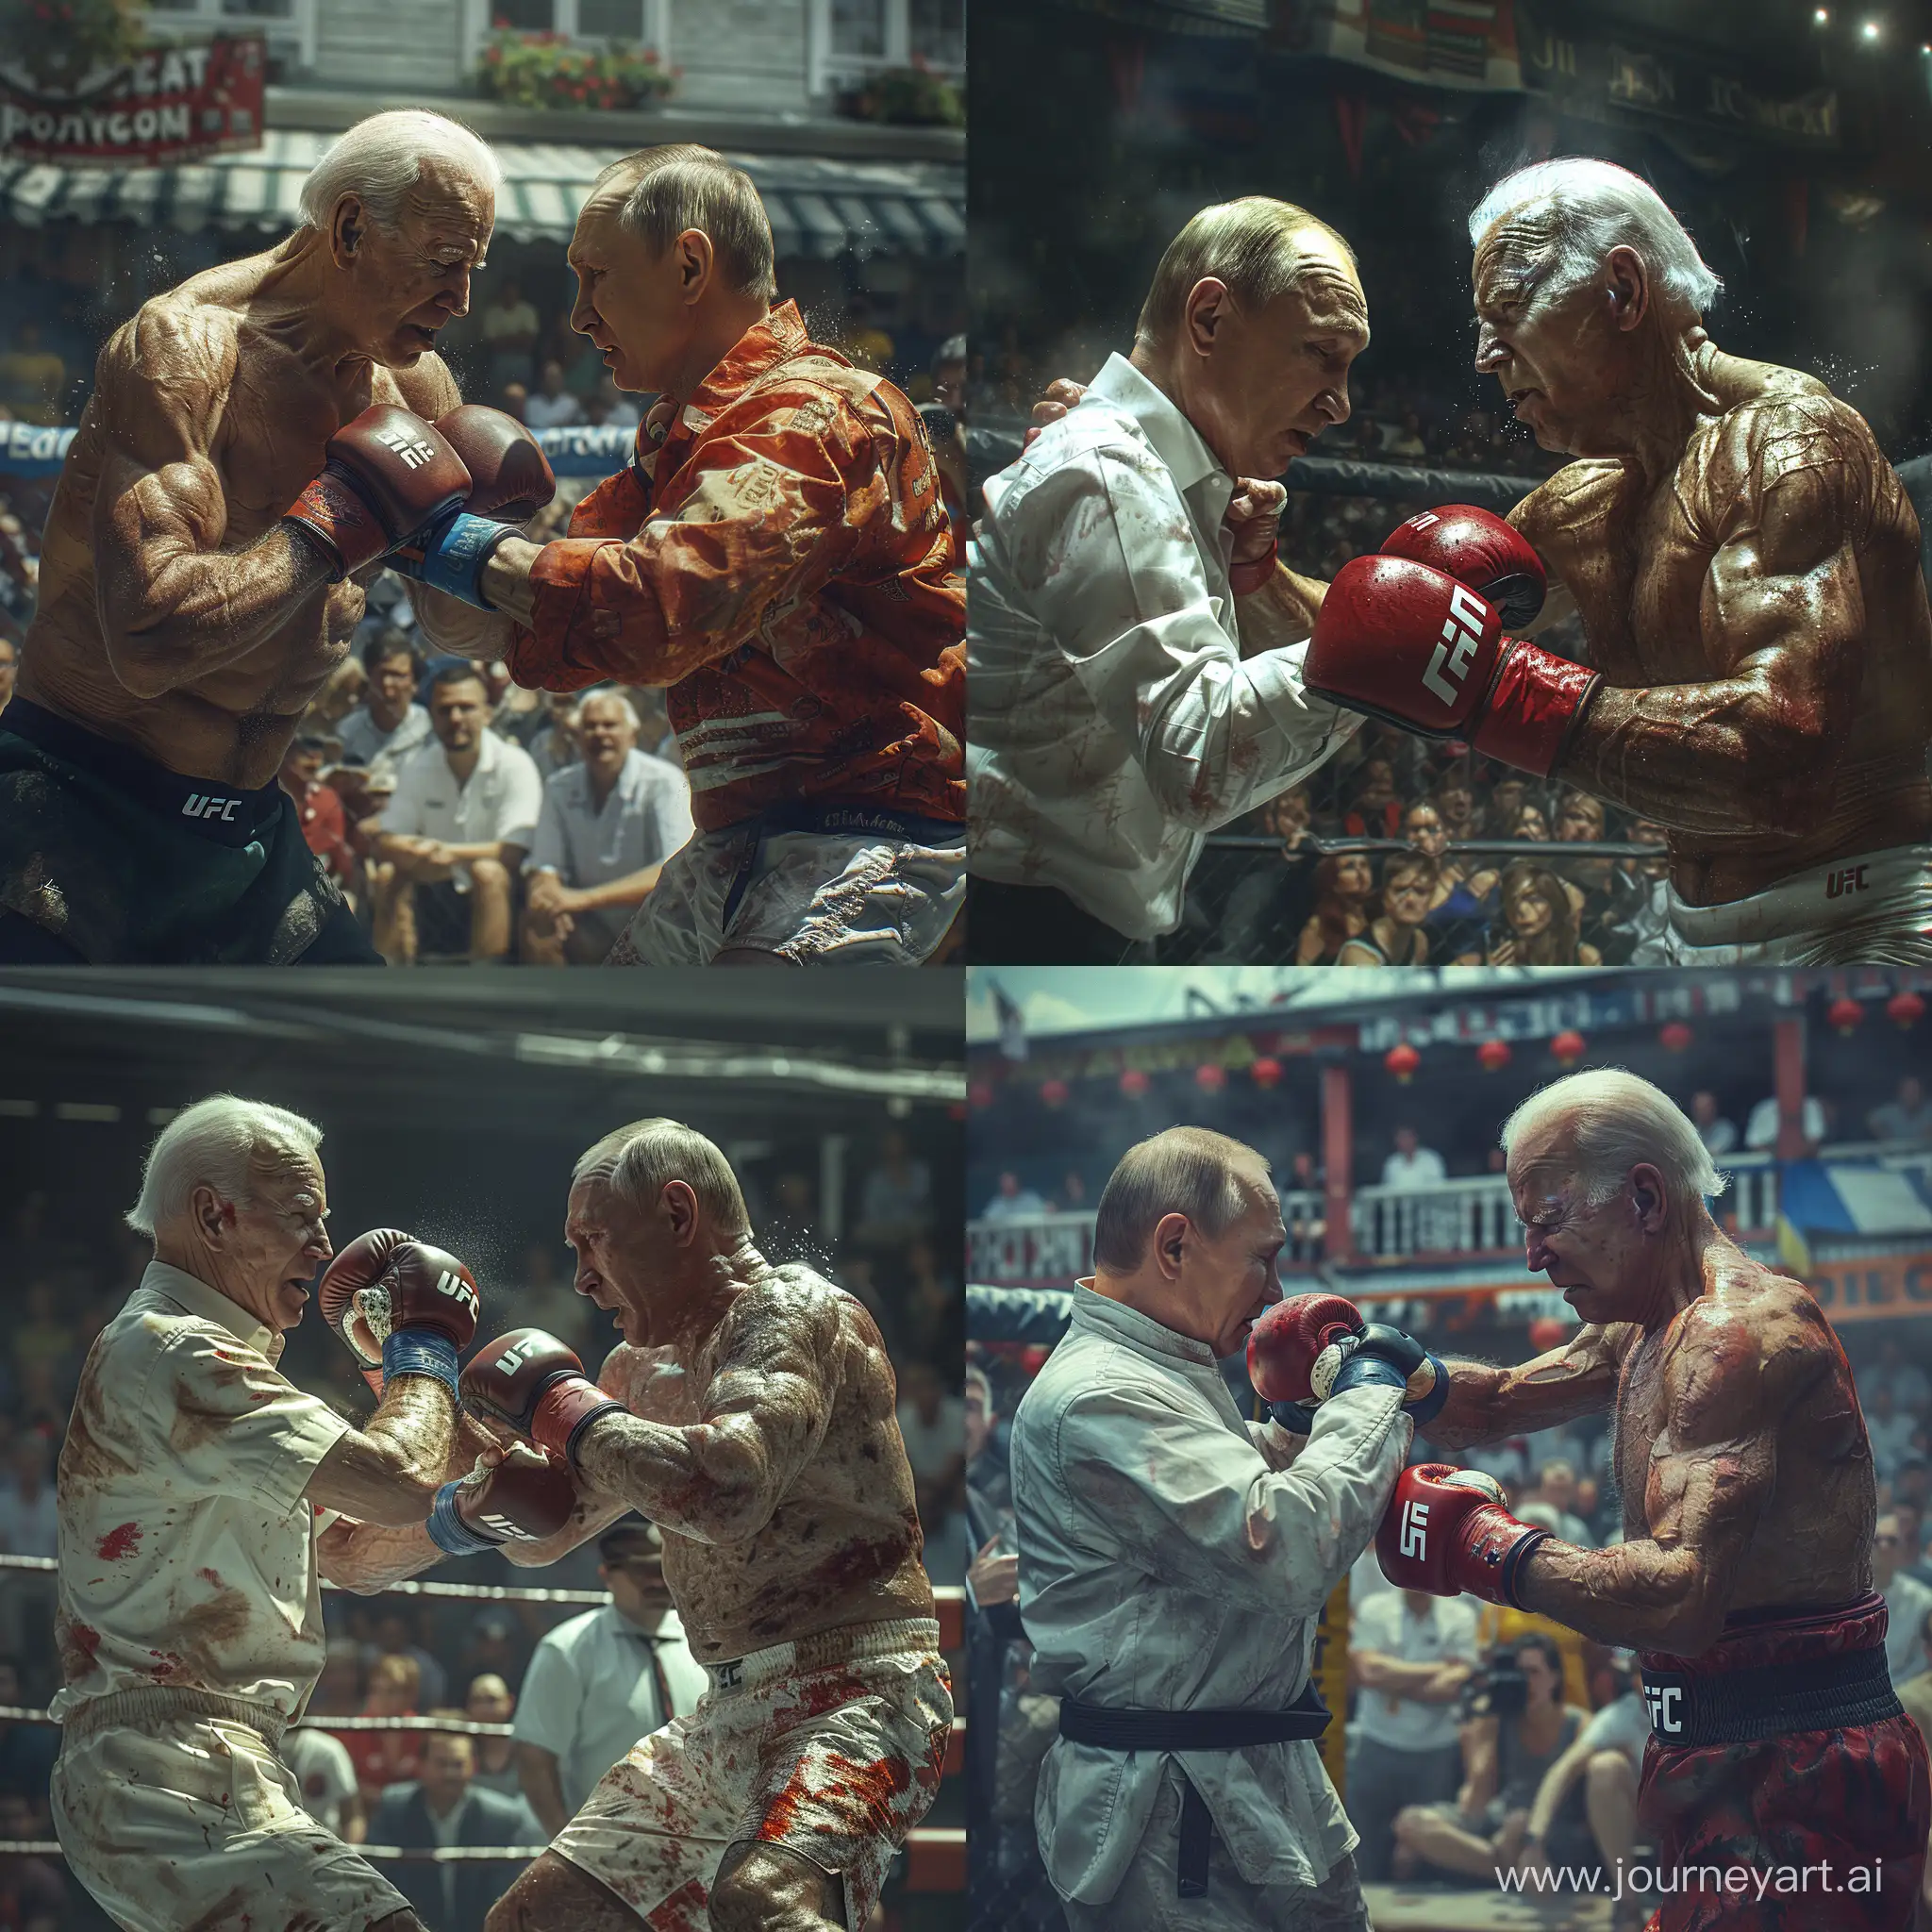 Joe-Biden-and-Vladimir-Putin-MMA-Match-with-Detailed-Skin